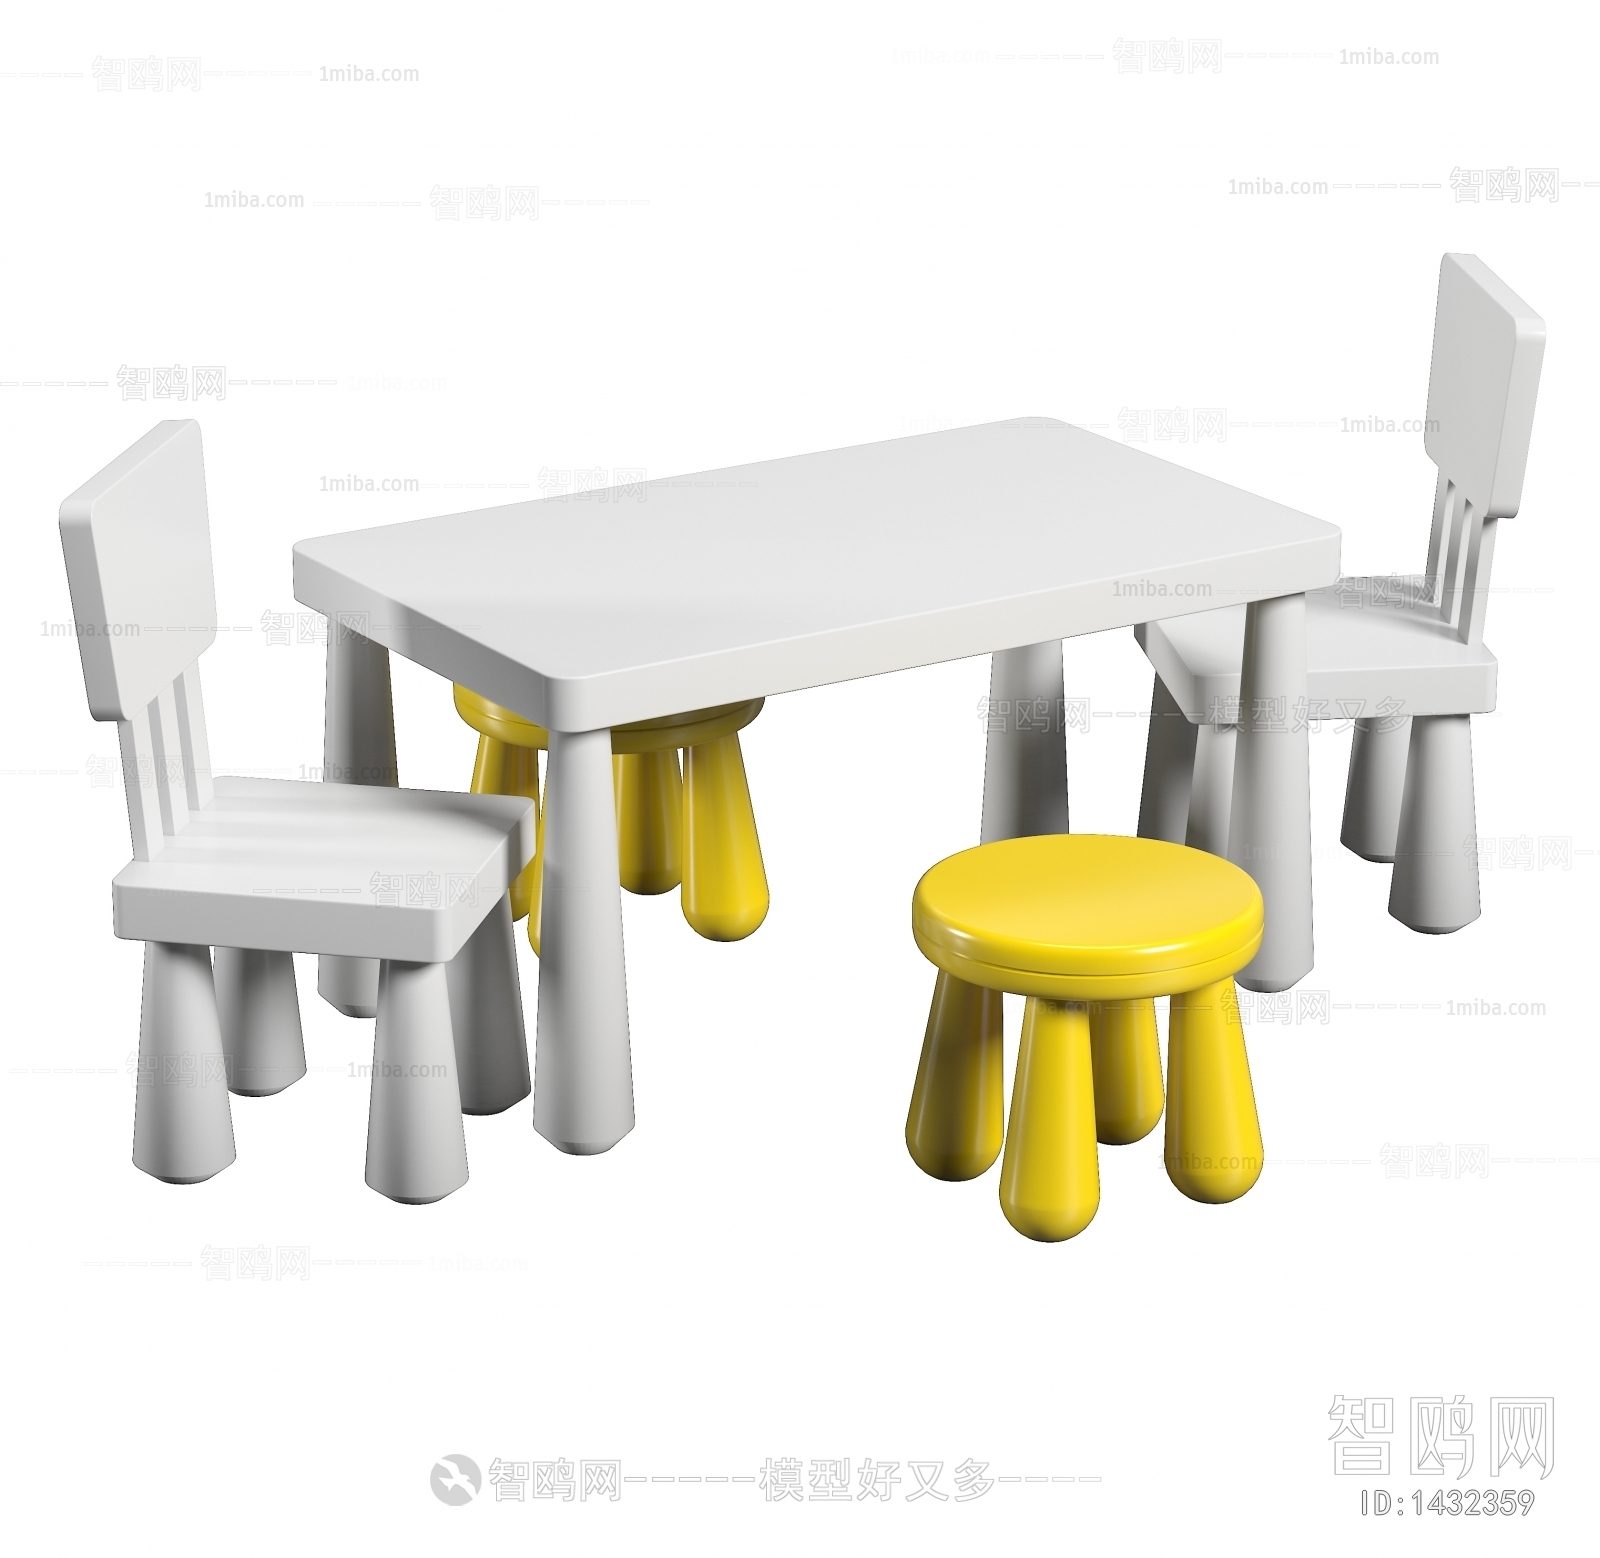 Modern Children's Table/chair